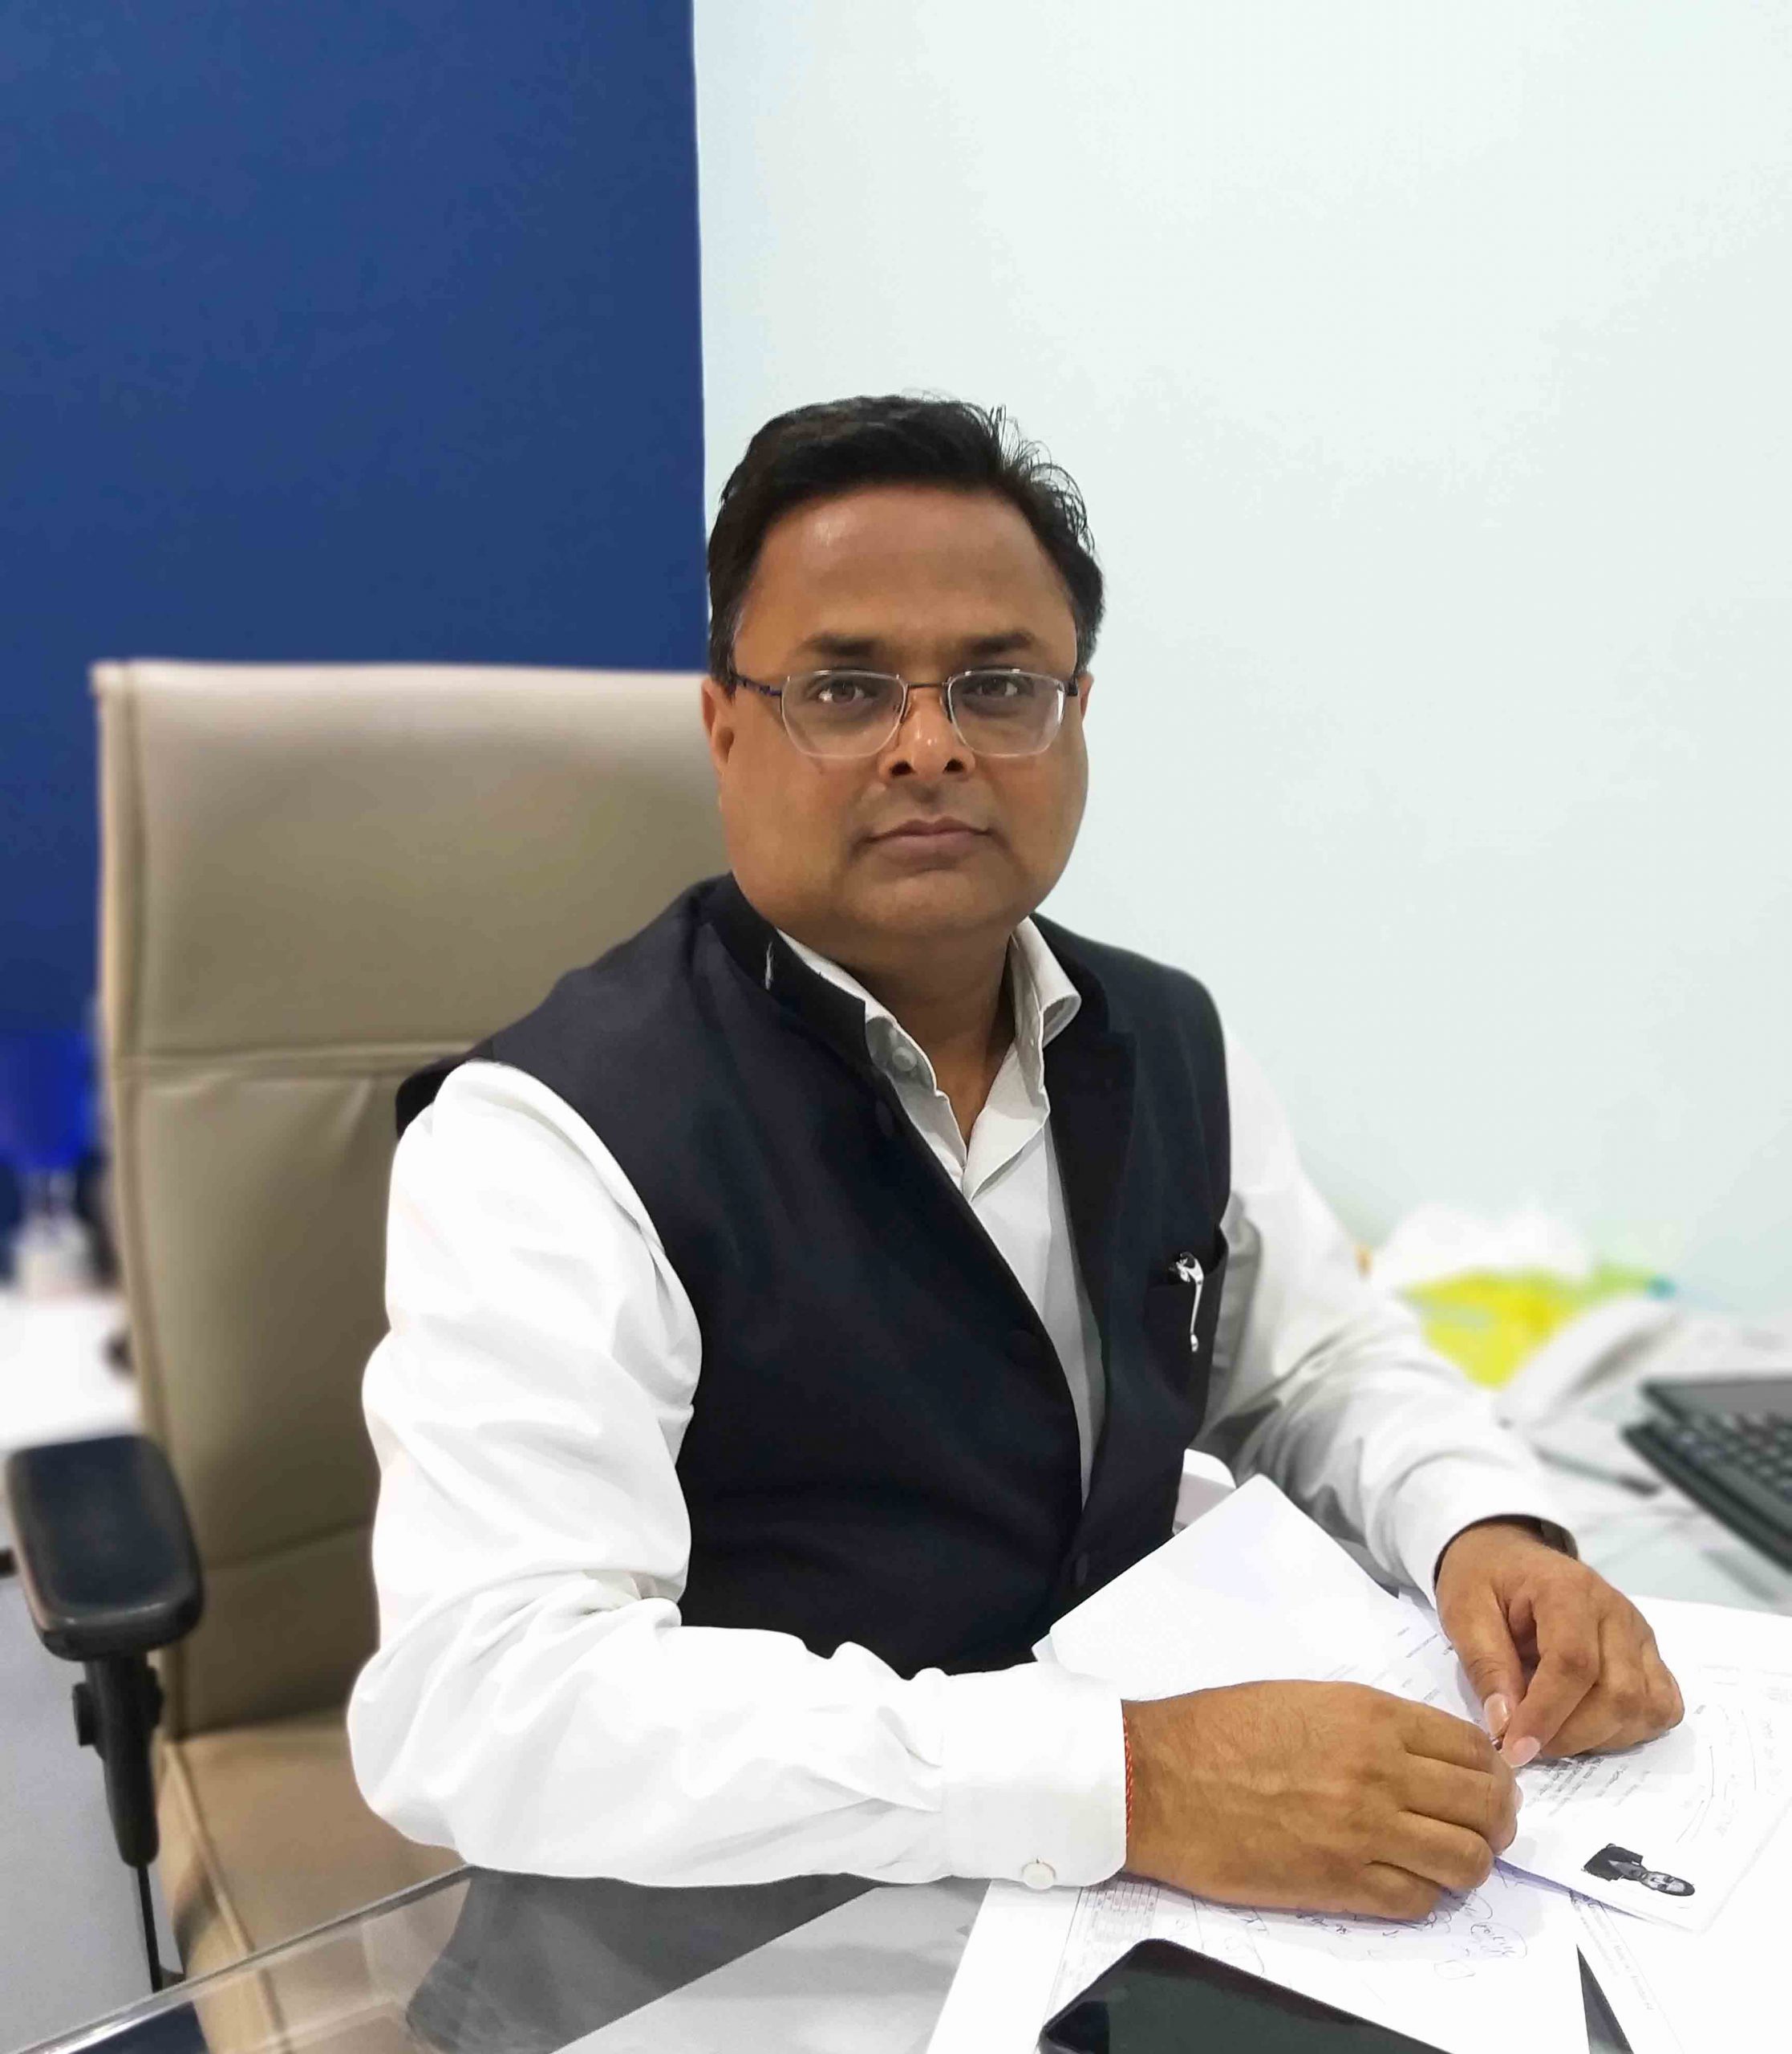 Mr. Rakesh Goyal, Director, Probus Insurance Broker Limited